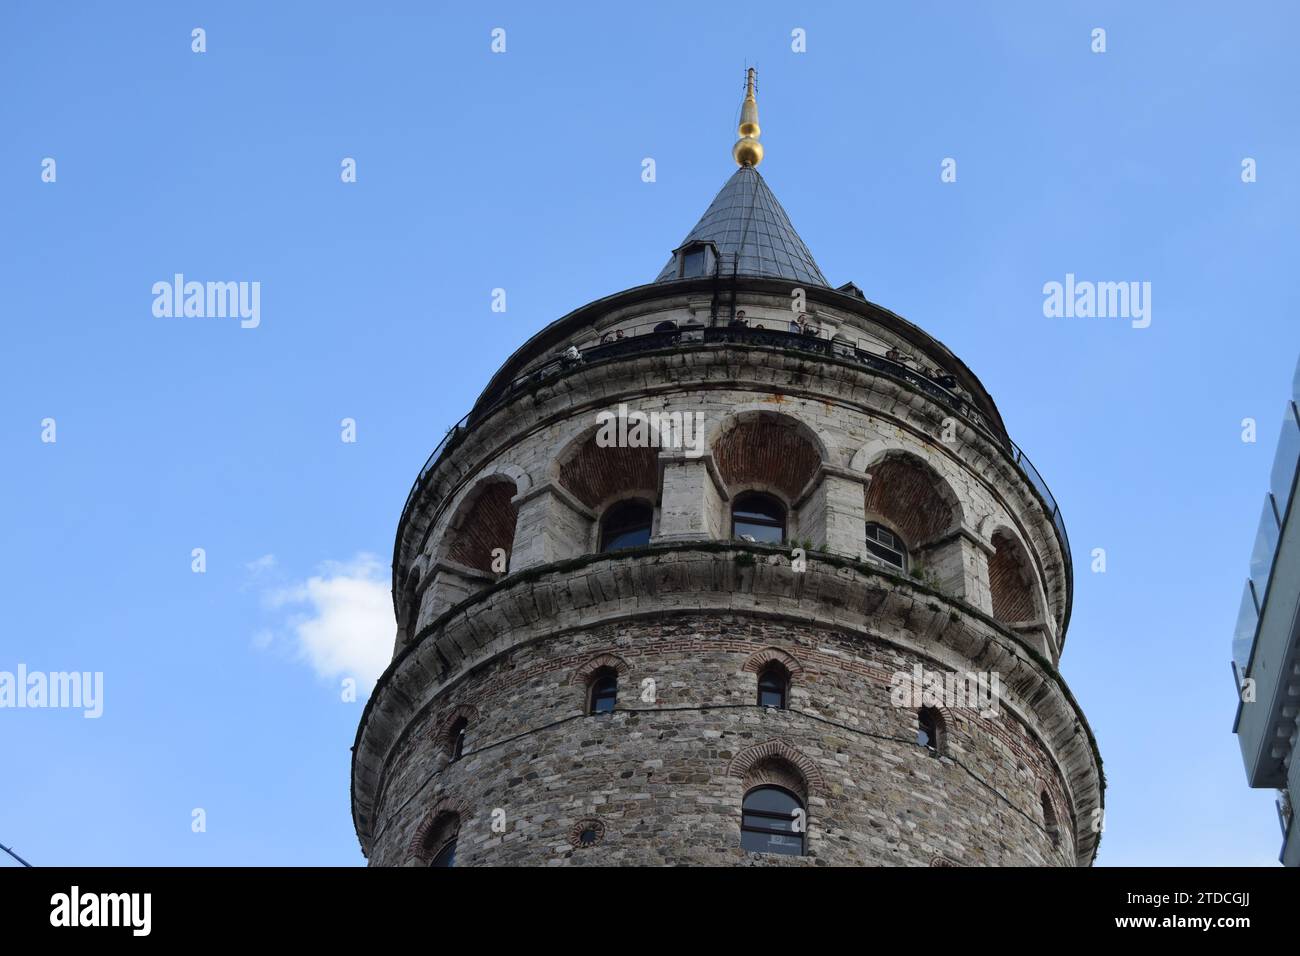 istanbul galata tower Stock Photo